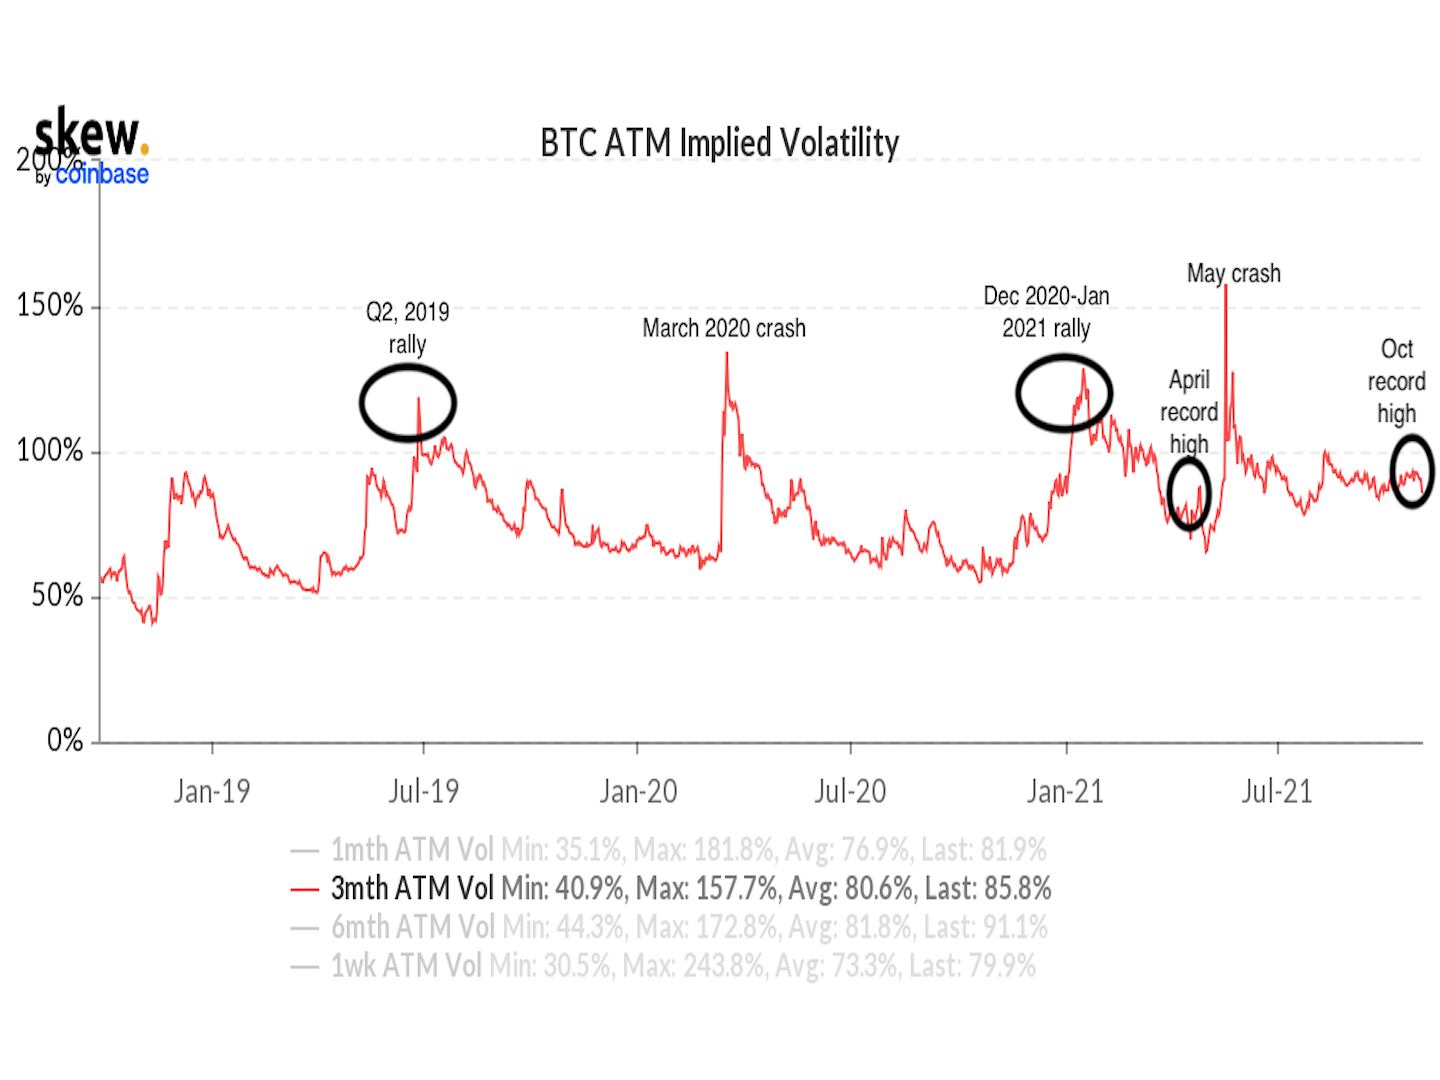 Bitcoin three-month implied volatility. Credit: Omkar Godbole at CoinDesk/Skew